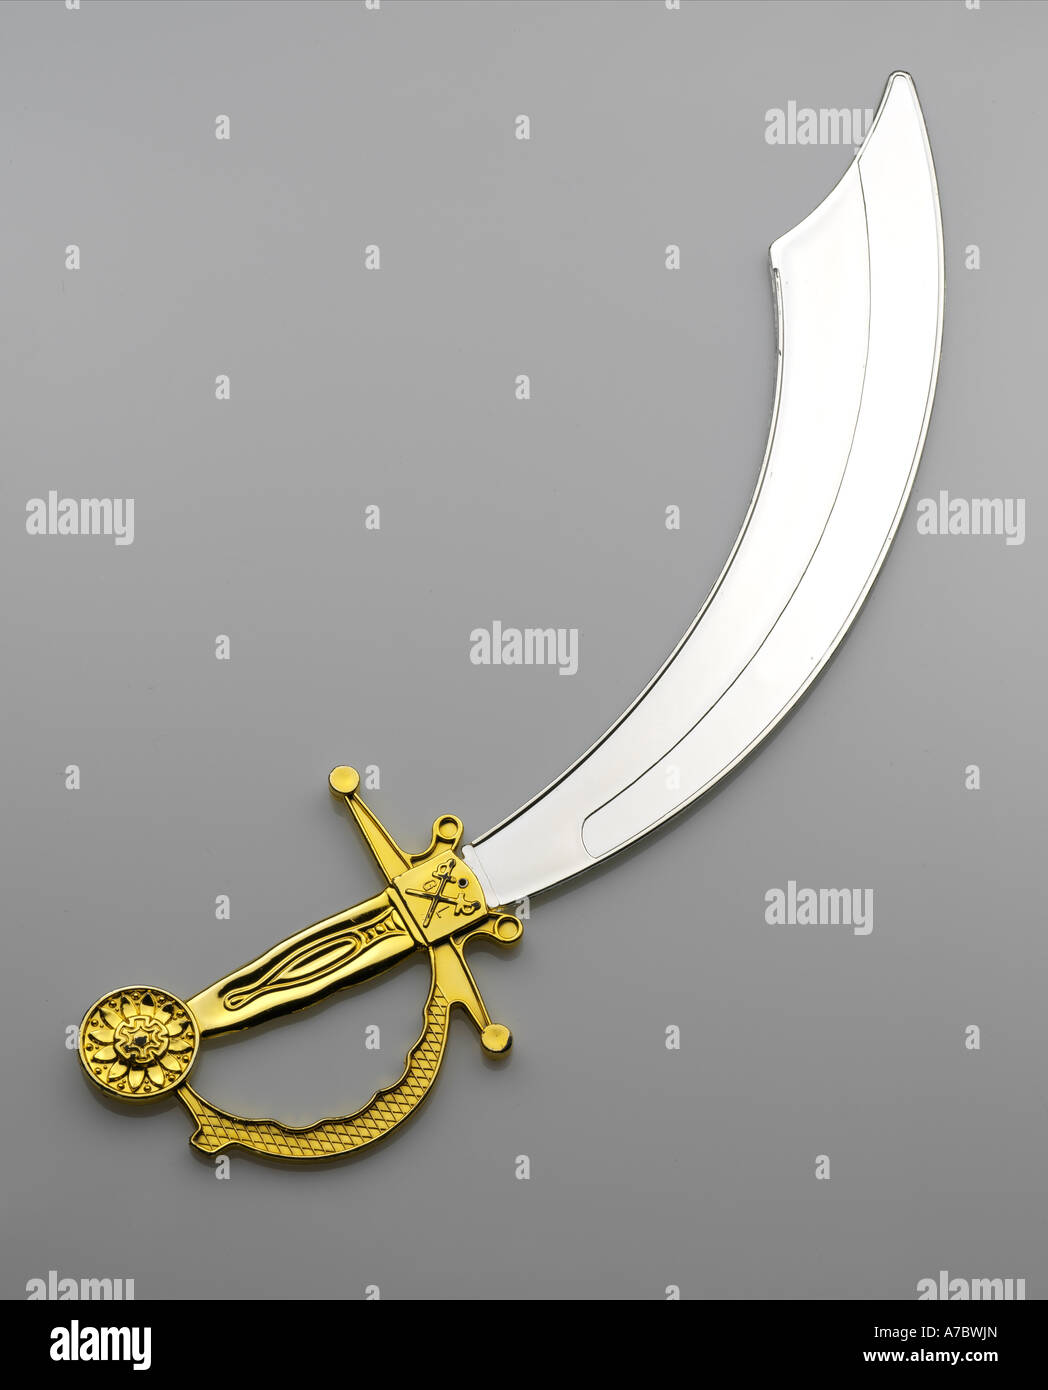 sword, saber, close up, gray background, gold handle, sandokan, blade, iron, sharp, battle, combat, heavy, large, toy, plastic Stock Photo